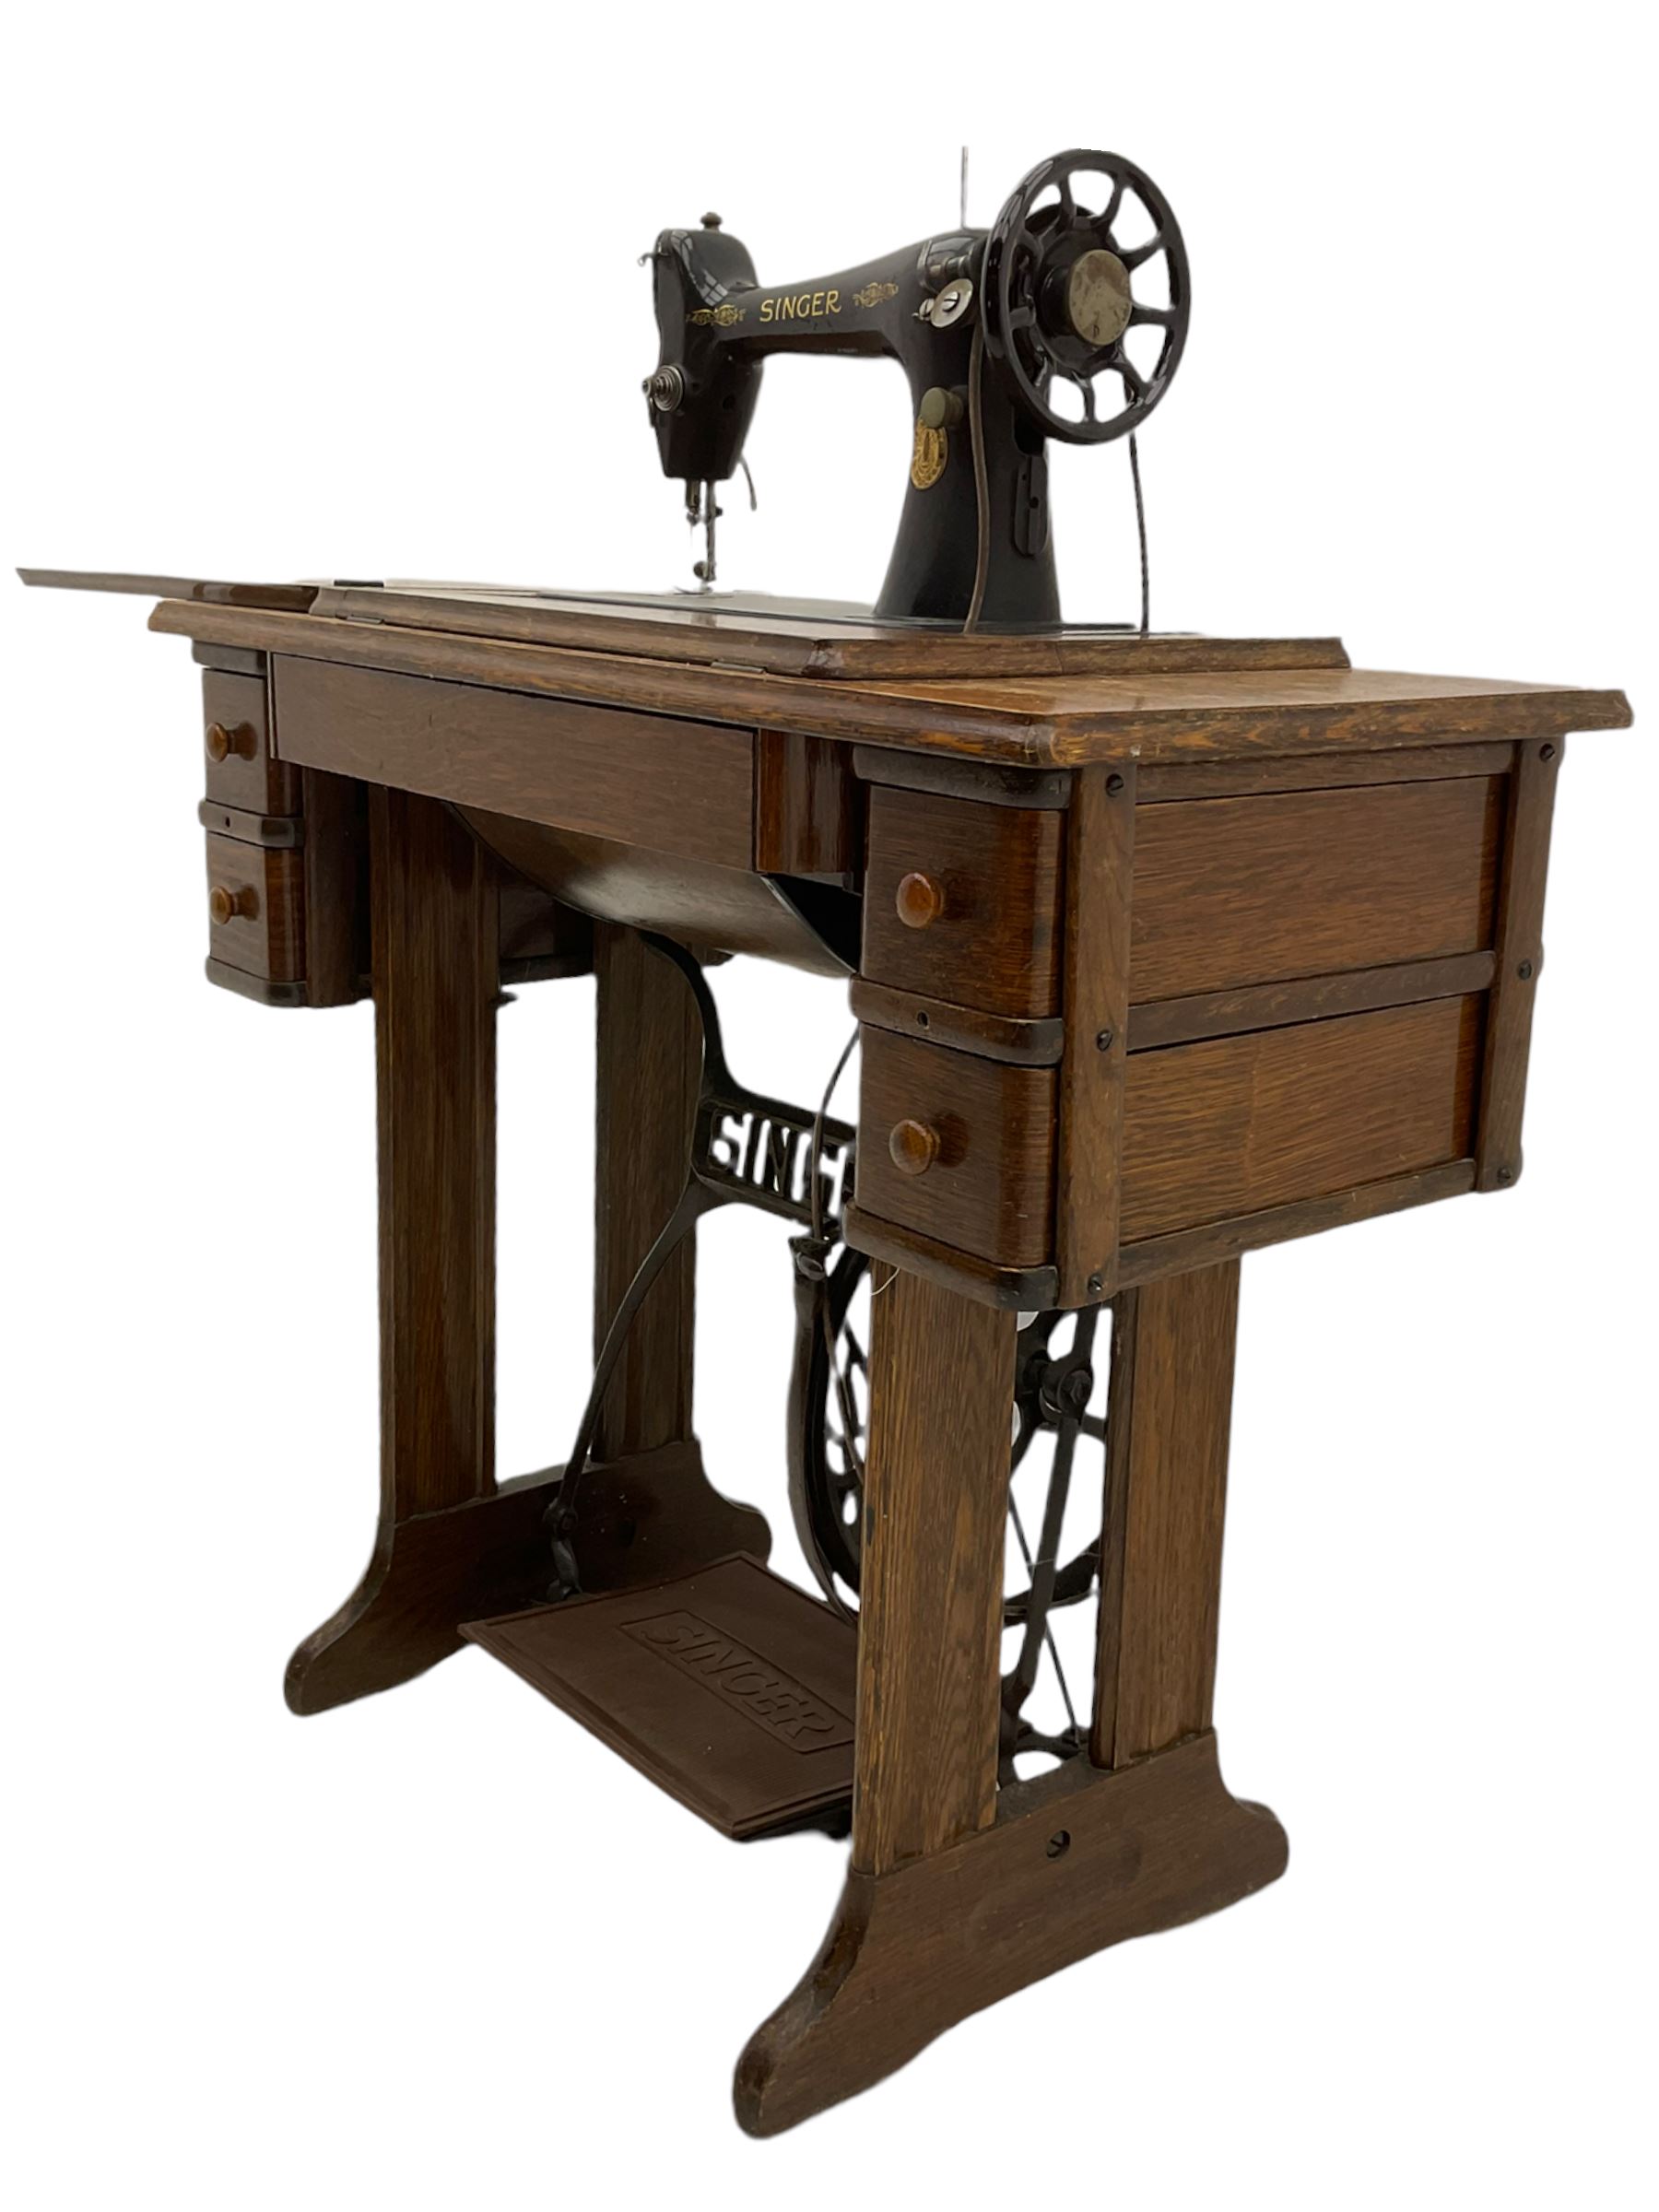 Singer treadle sewing machine - Image 3 of 12